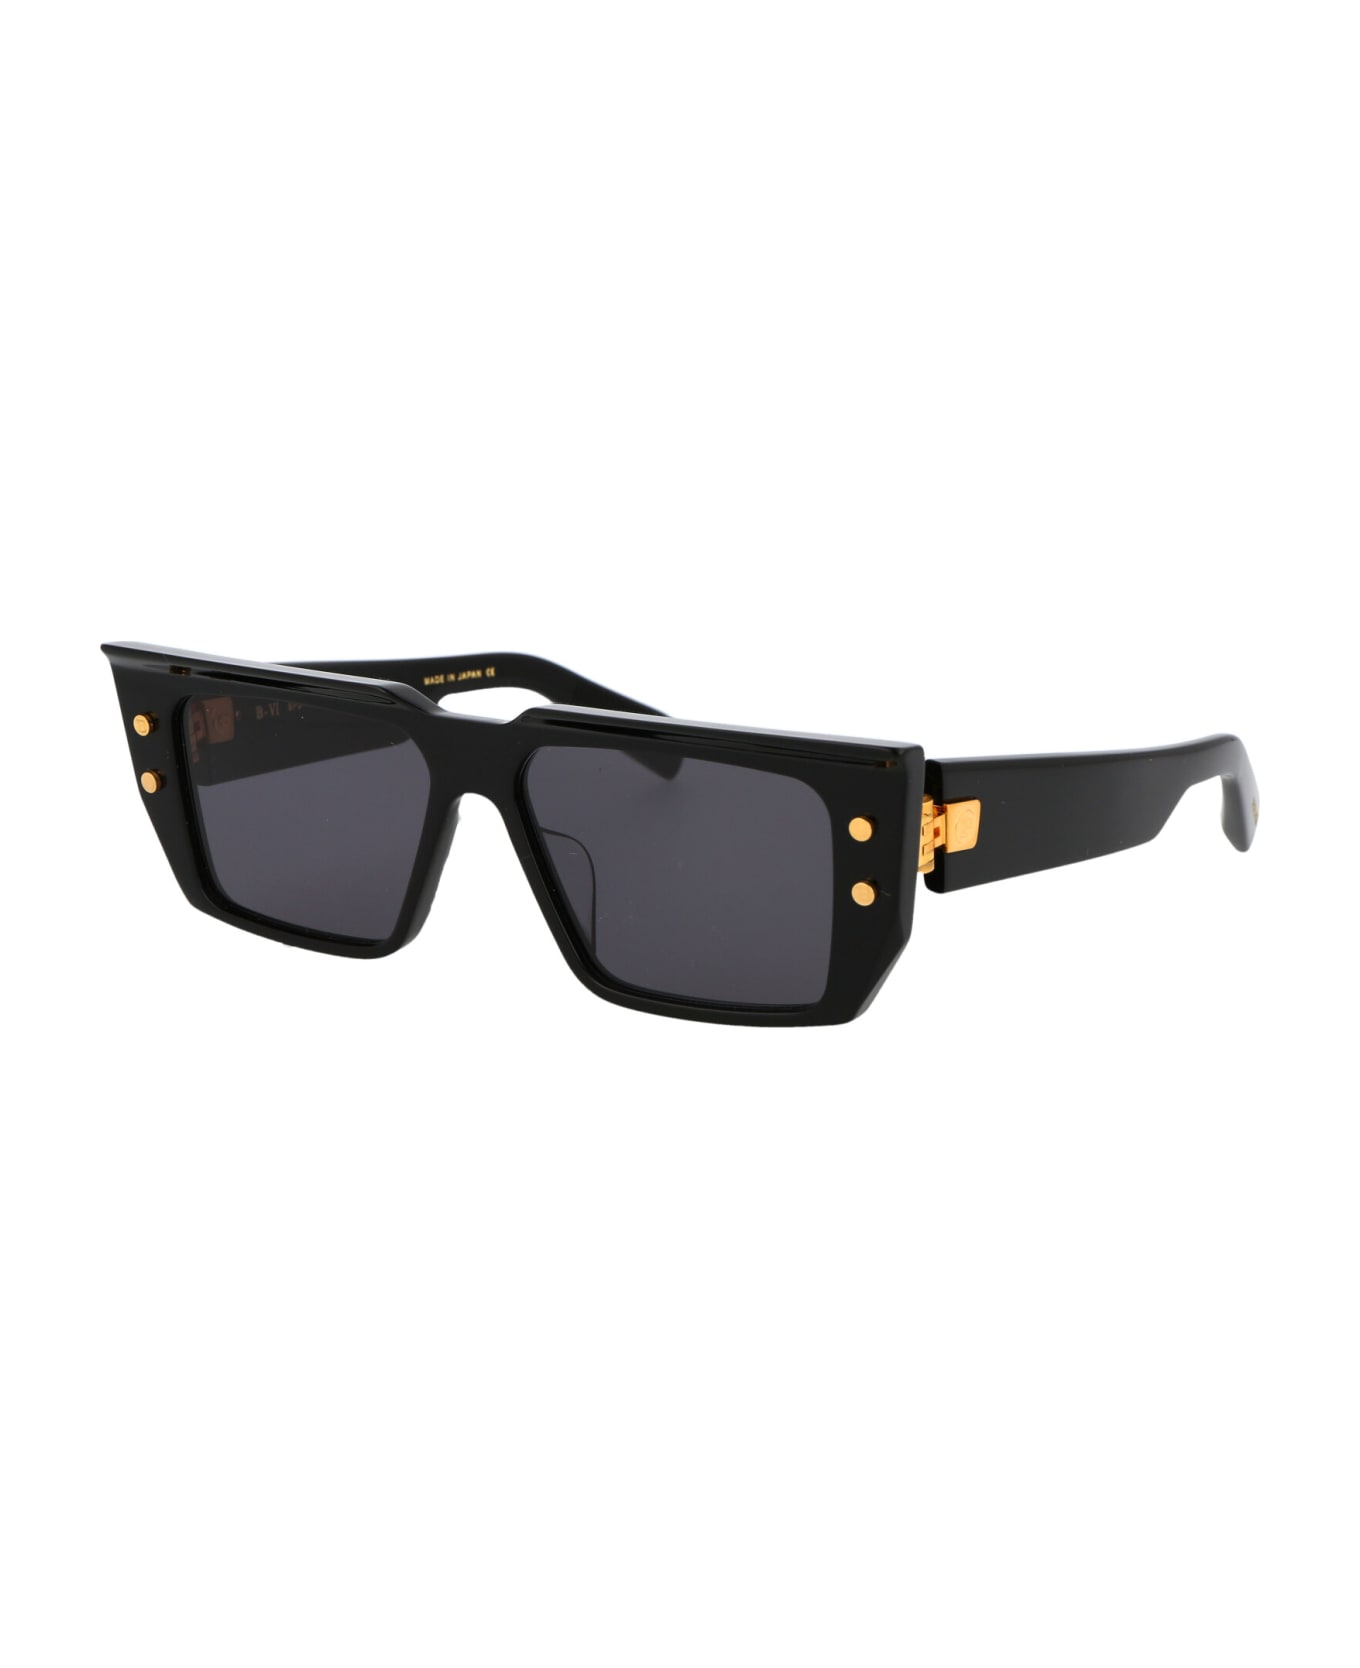 Balmain B - Vi Sunglasses - BLACK GOLD W/ DARK GREY サングラス